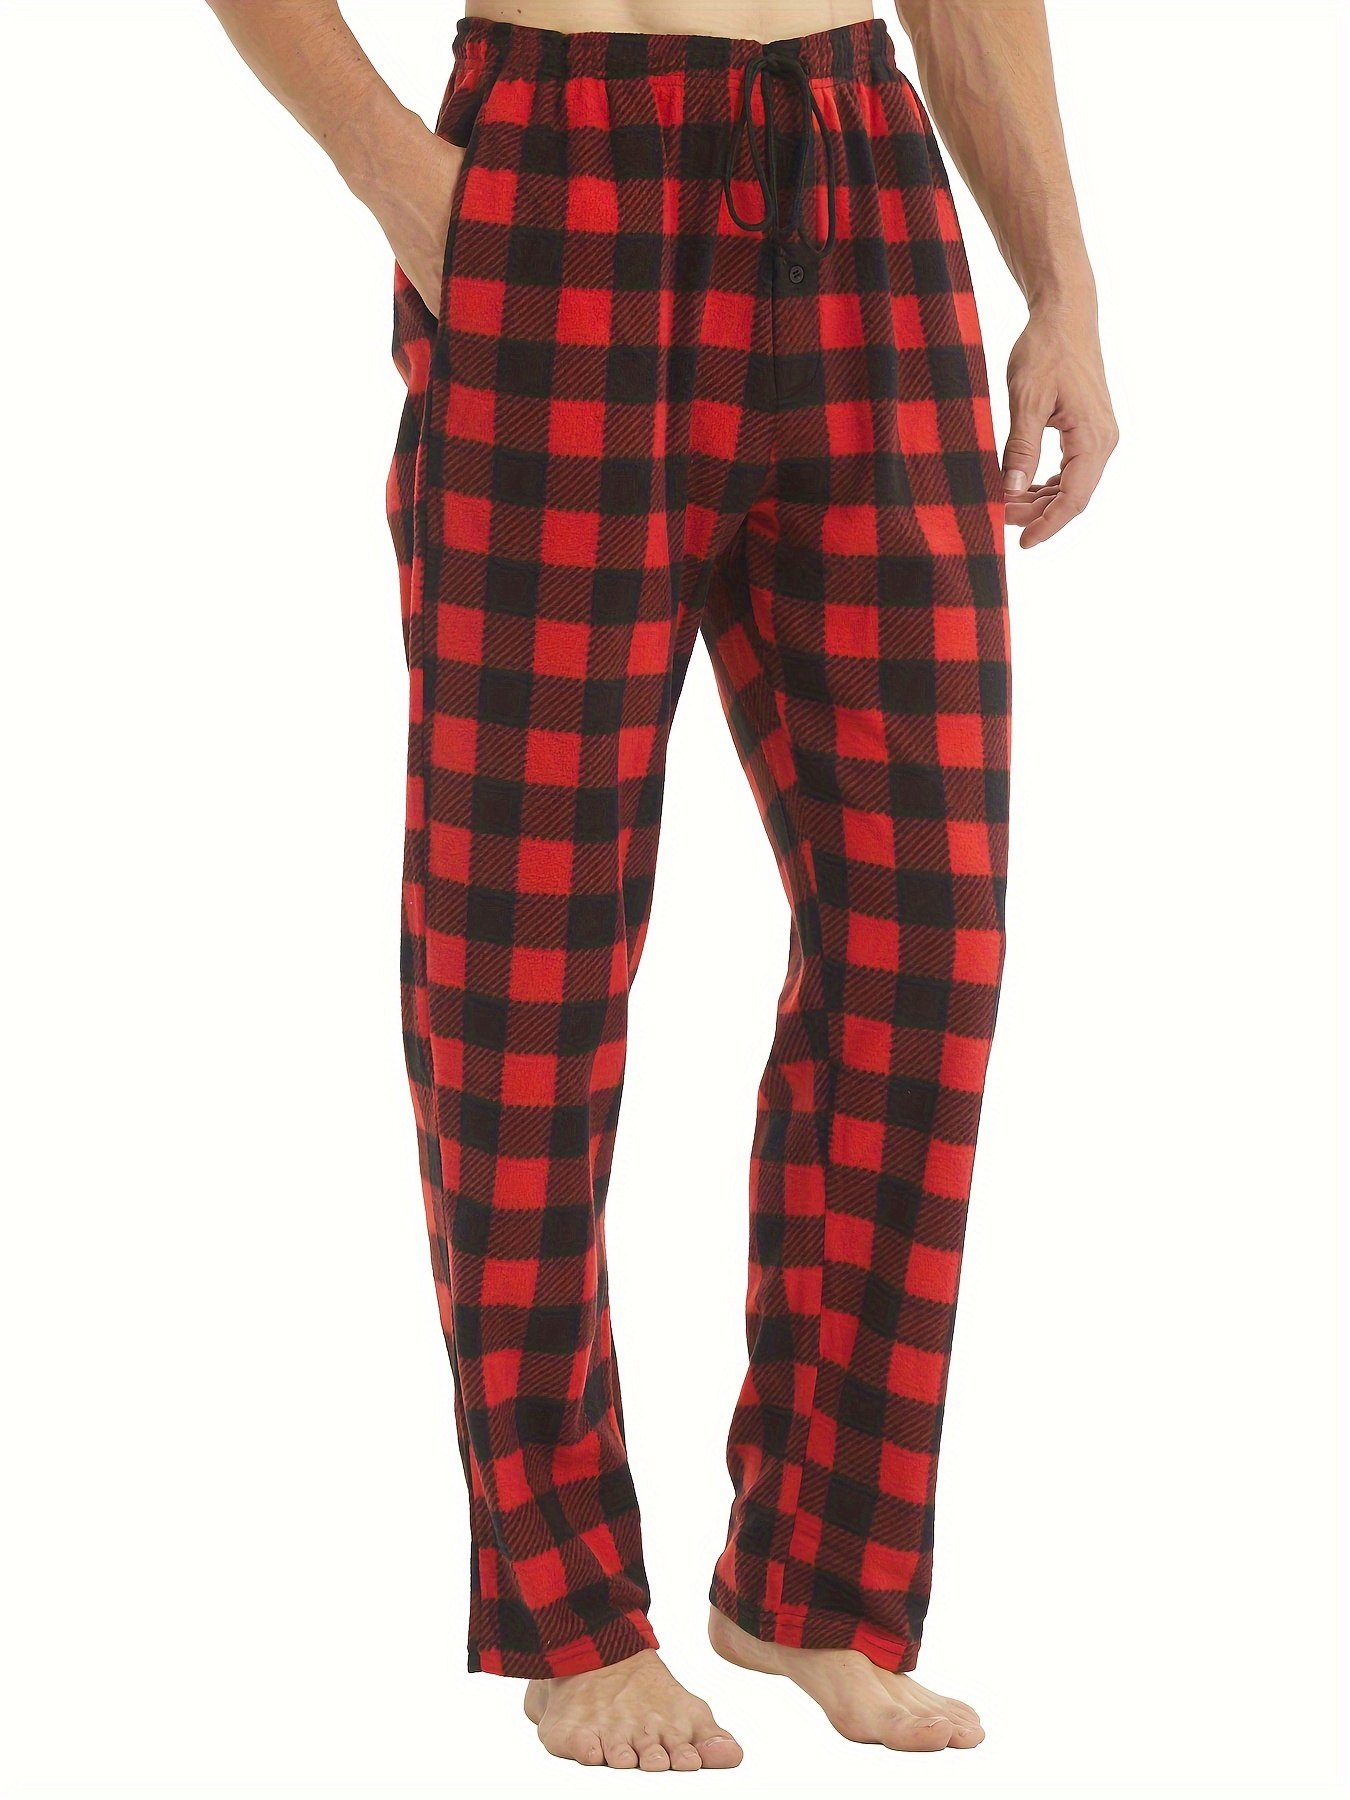 Pantalones Gruesos Cordón Cuadros Hombre Ropa Pijama Gruesas